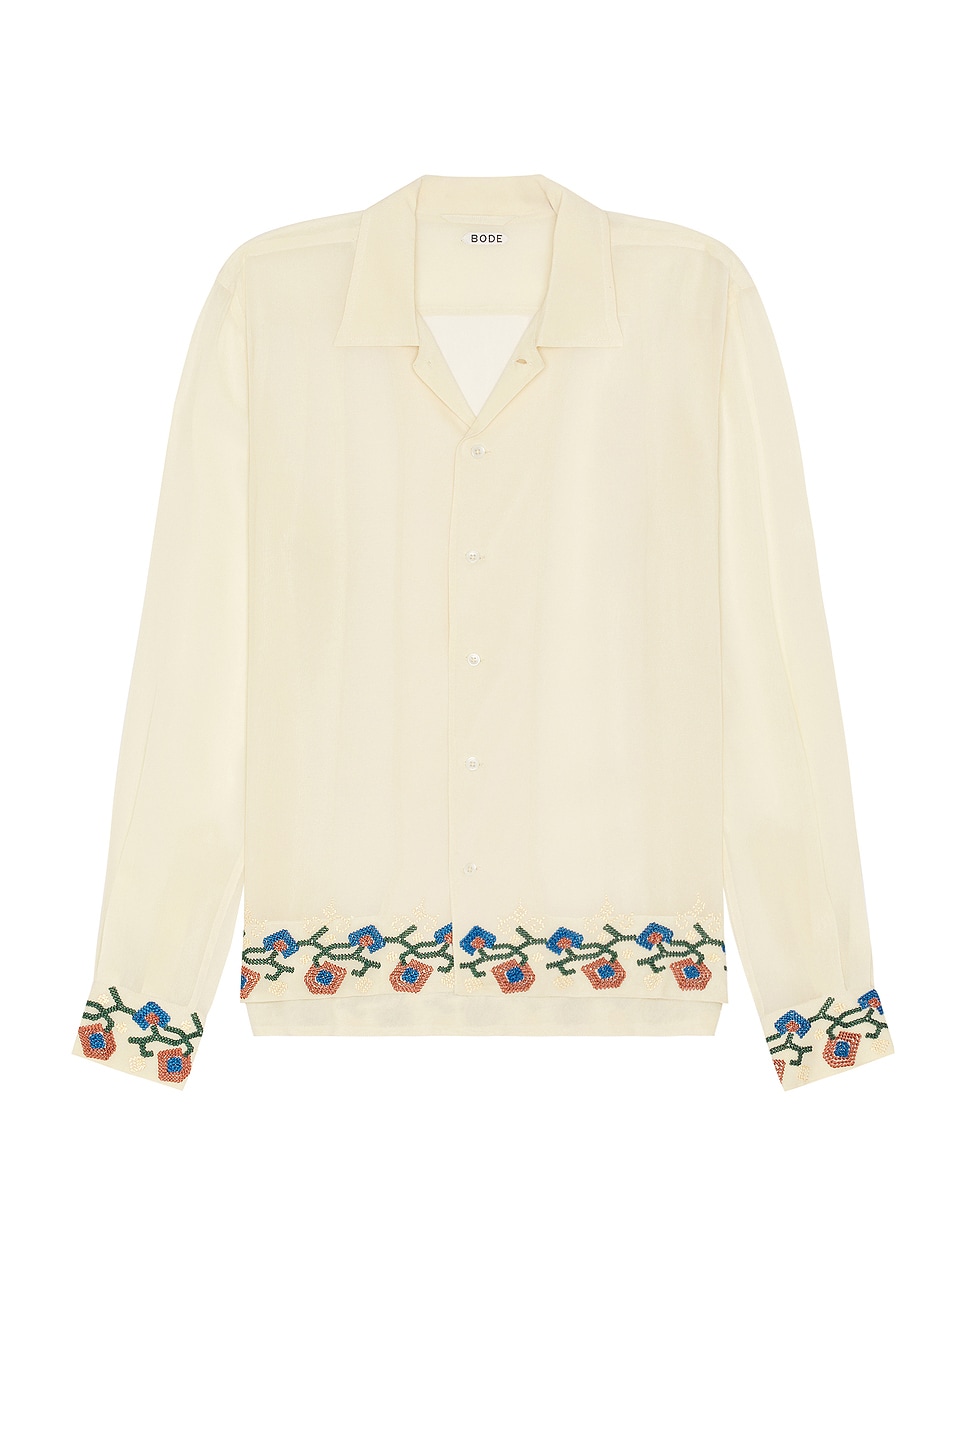 Image 1 of BODE Flowering Liana Longsleeve Shirt in Cream Multi